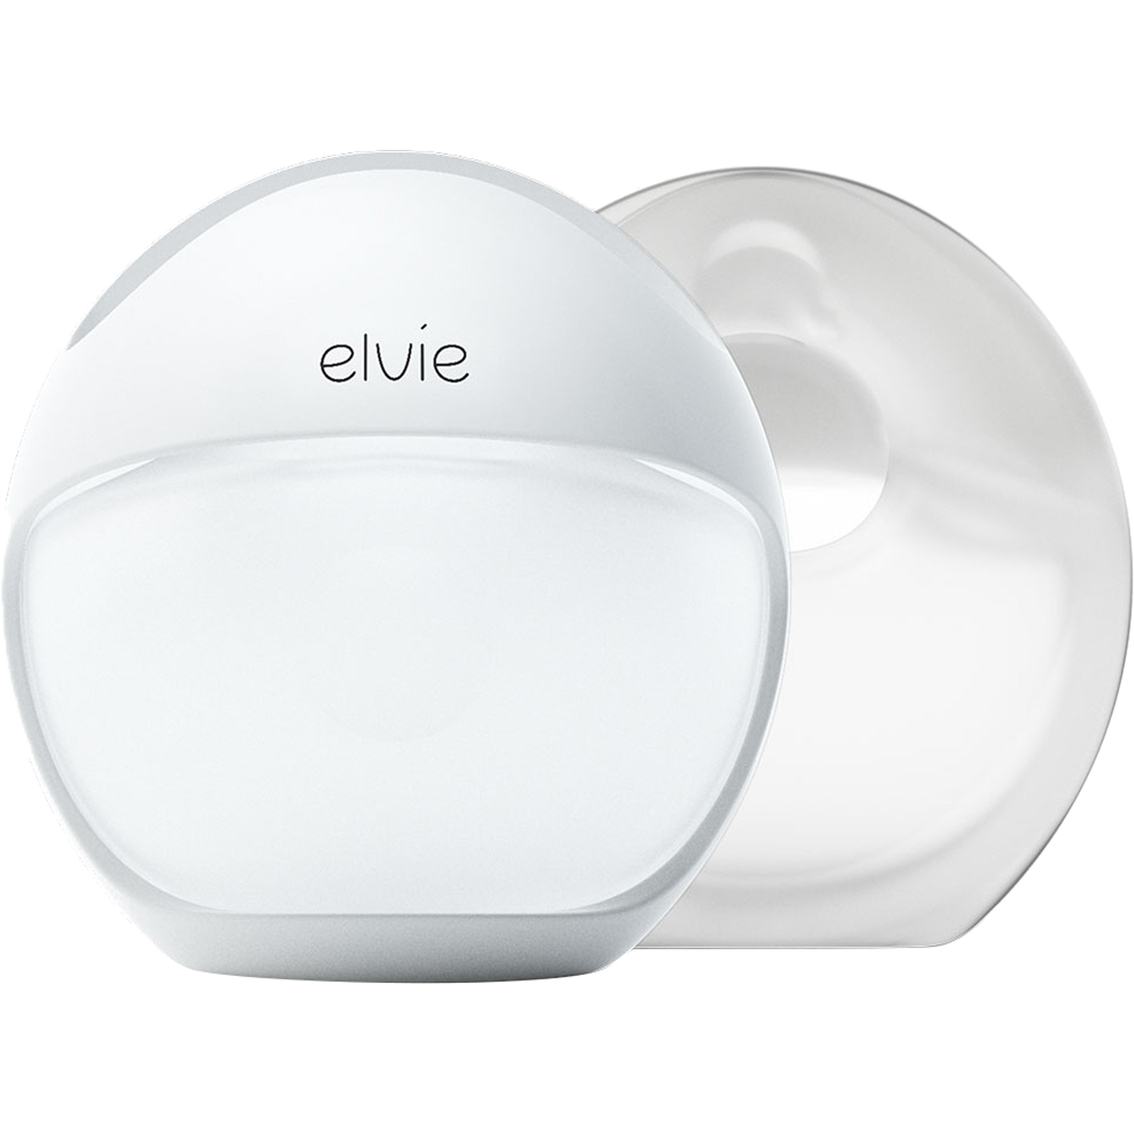 Elvie Curve Manual Breast Pump - Image 2 of 8